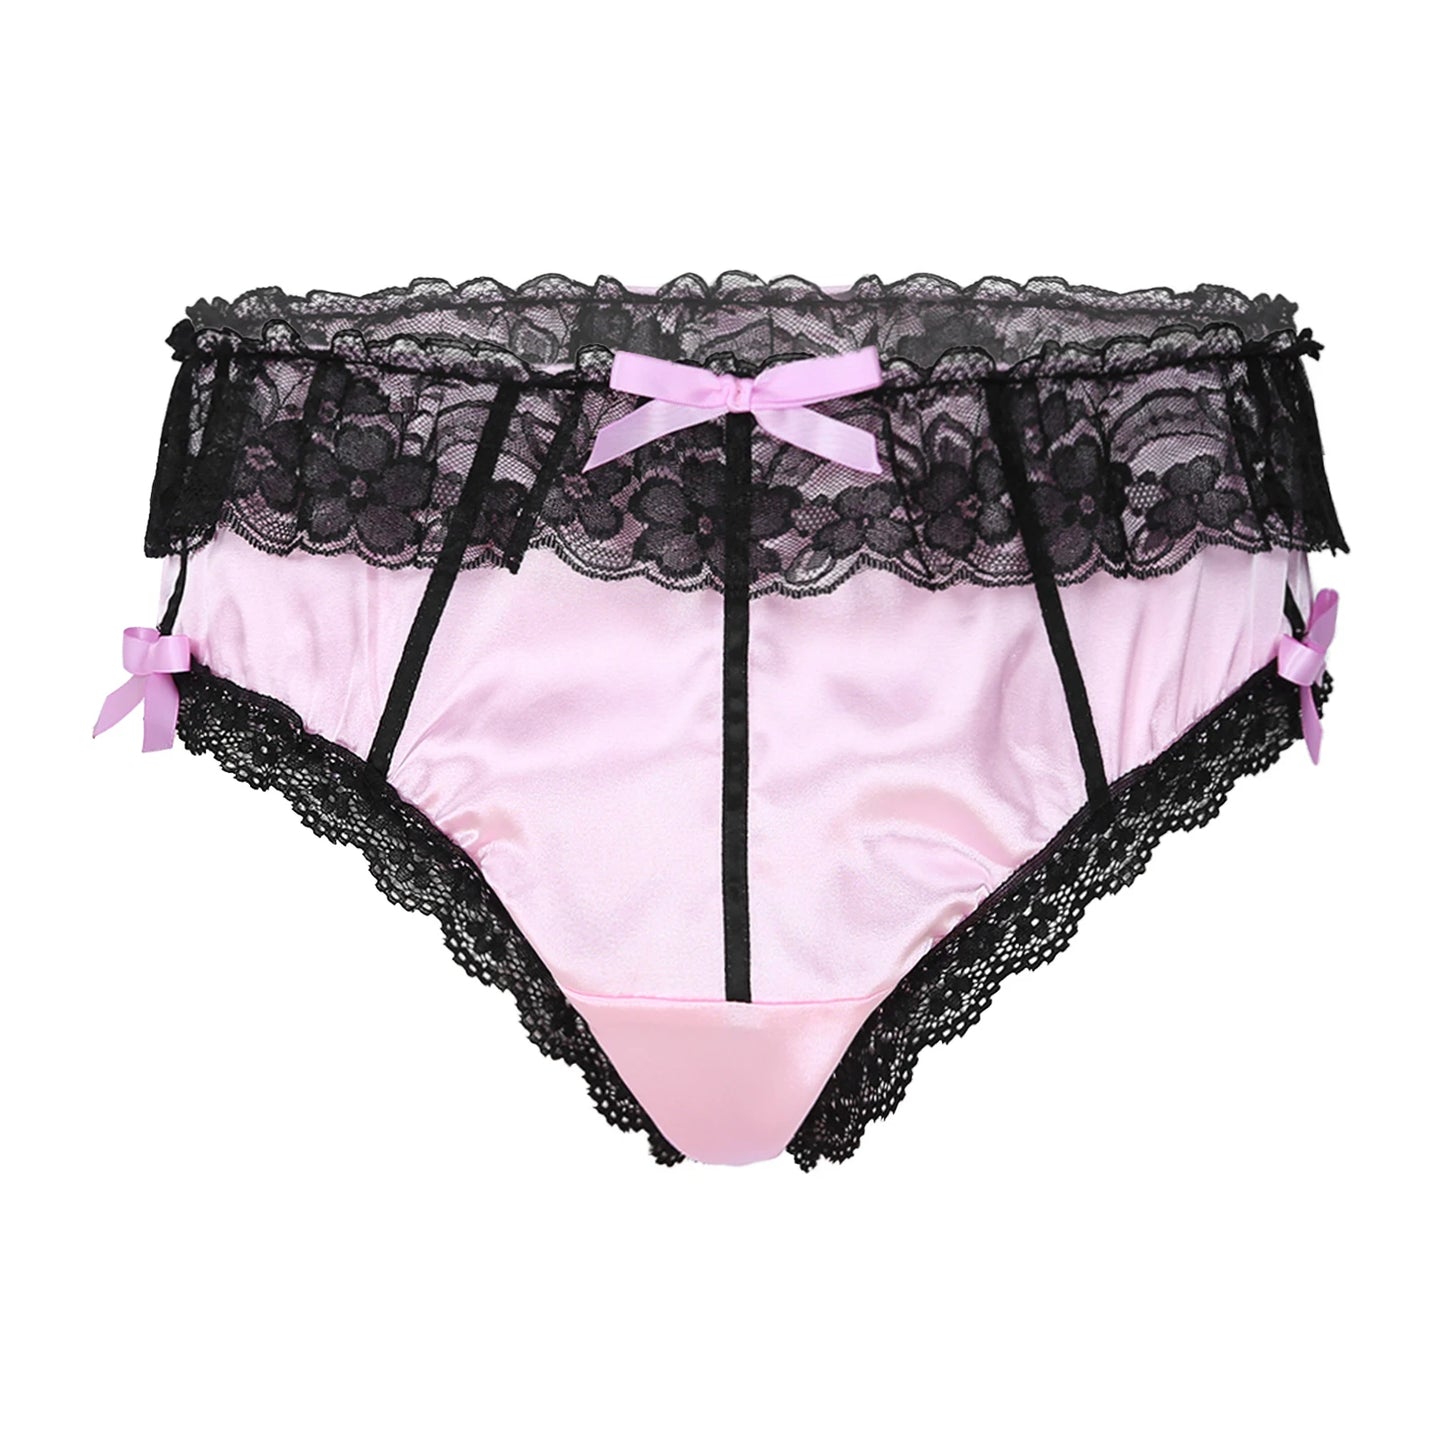 Pink Men's Panties Sexy Lingerie Ruffle Lace Trim Low Waist Briefs